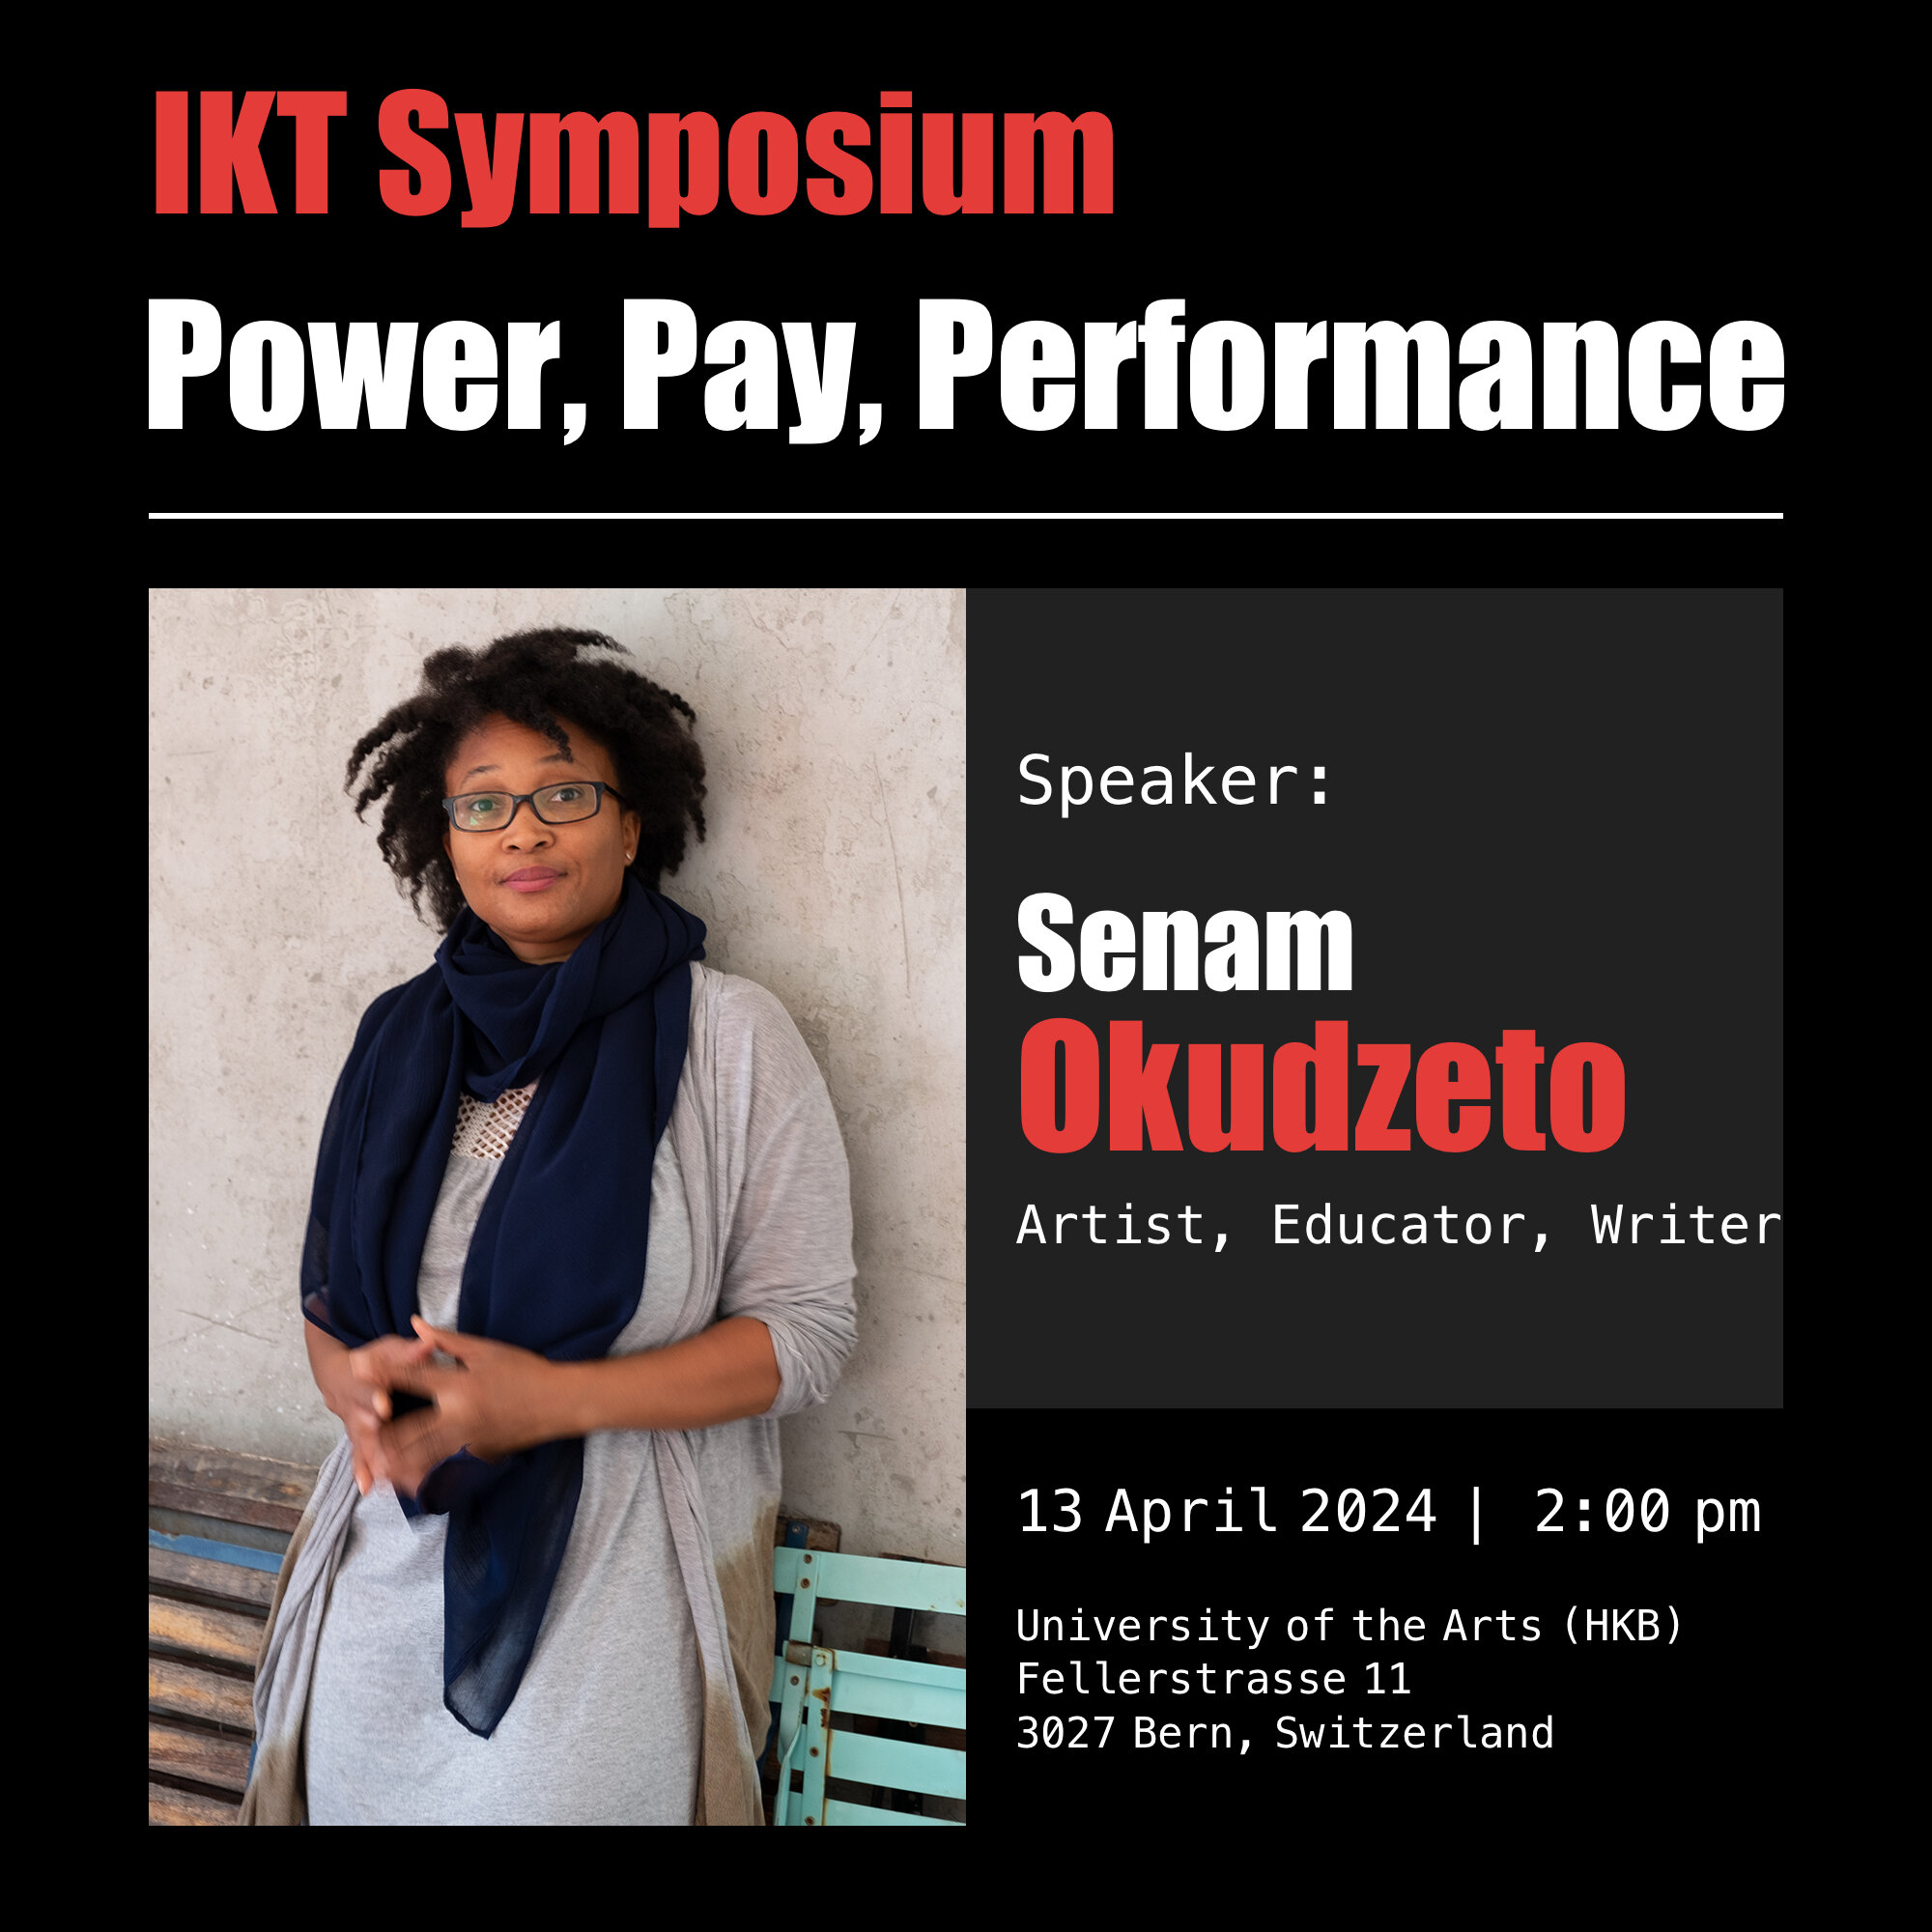 Meet IKT Symposium Speaker: Senam Okudzeto @counter.histories 

Don't miss Senam Okudzeto at the IKT Symposium 2024 on April 13th at 2:00 pm! Senam, a British-American artist of U.S and Ghanaian descent, merges painting, film, and scholarly research 